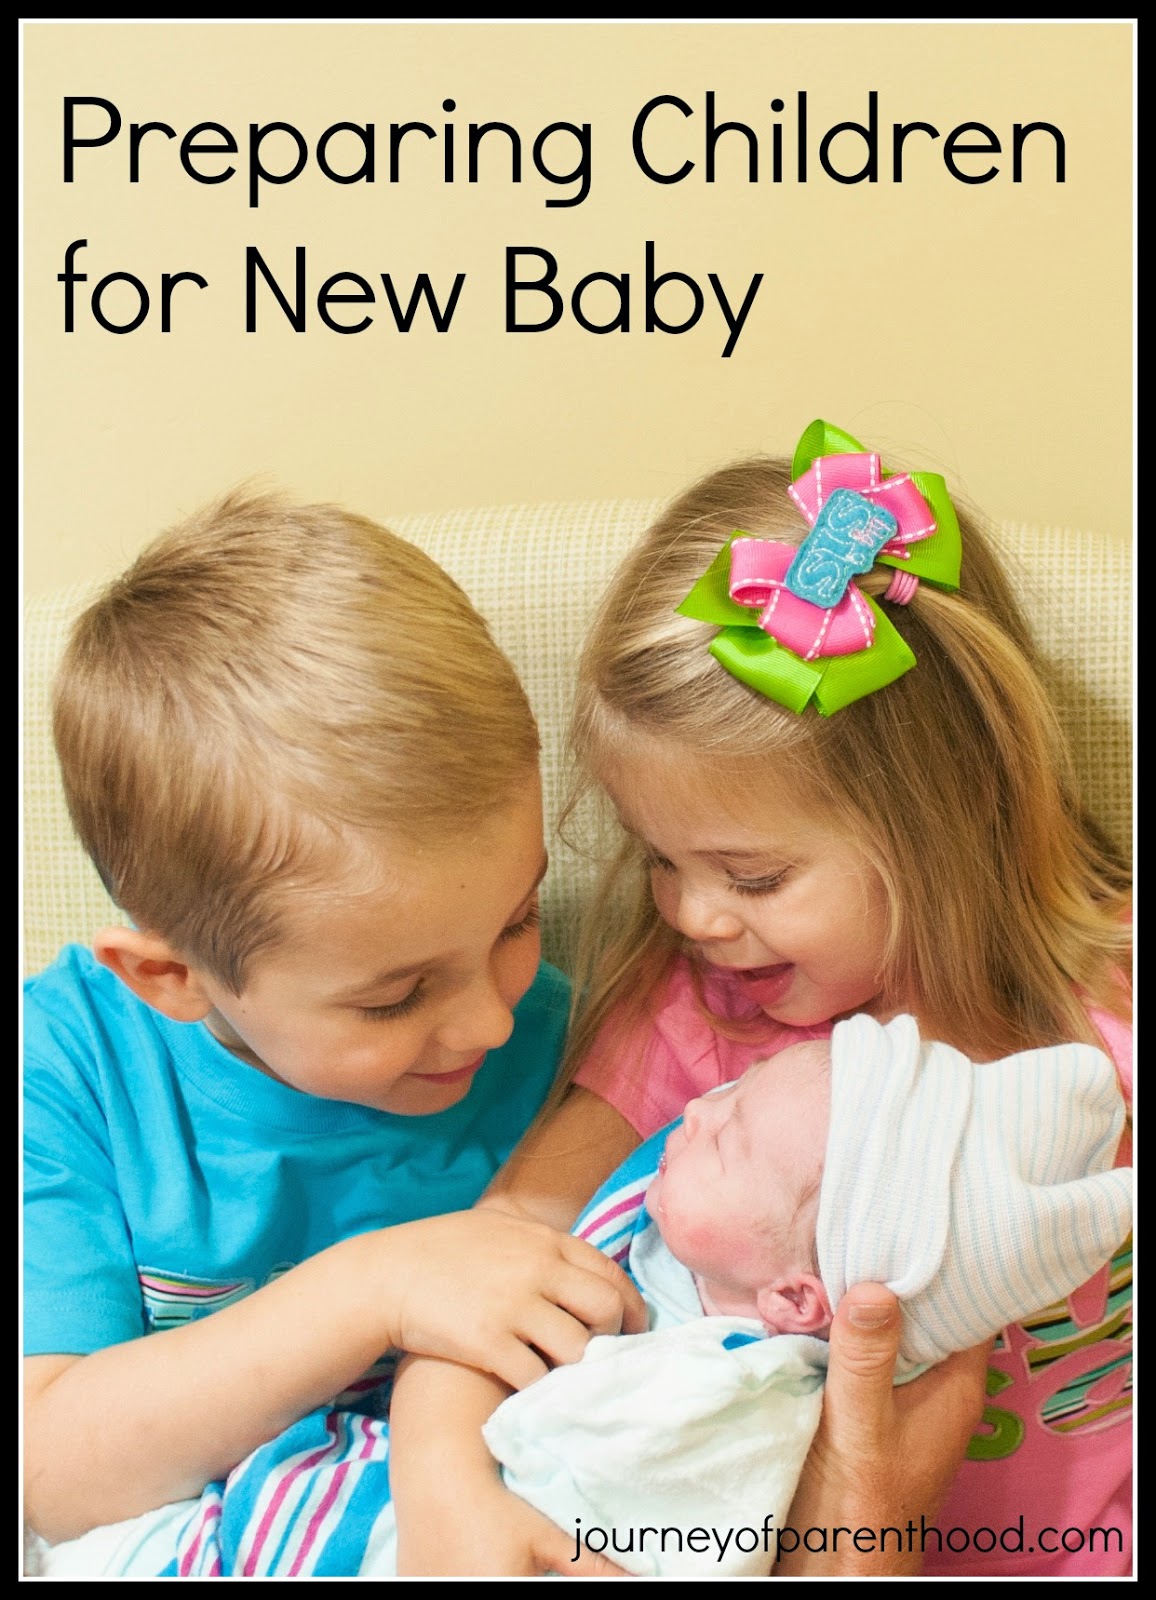 Preparing Children for New Baby